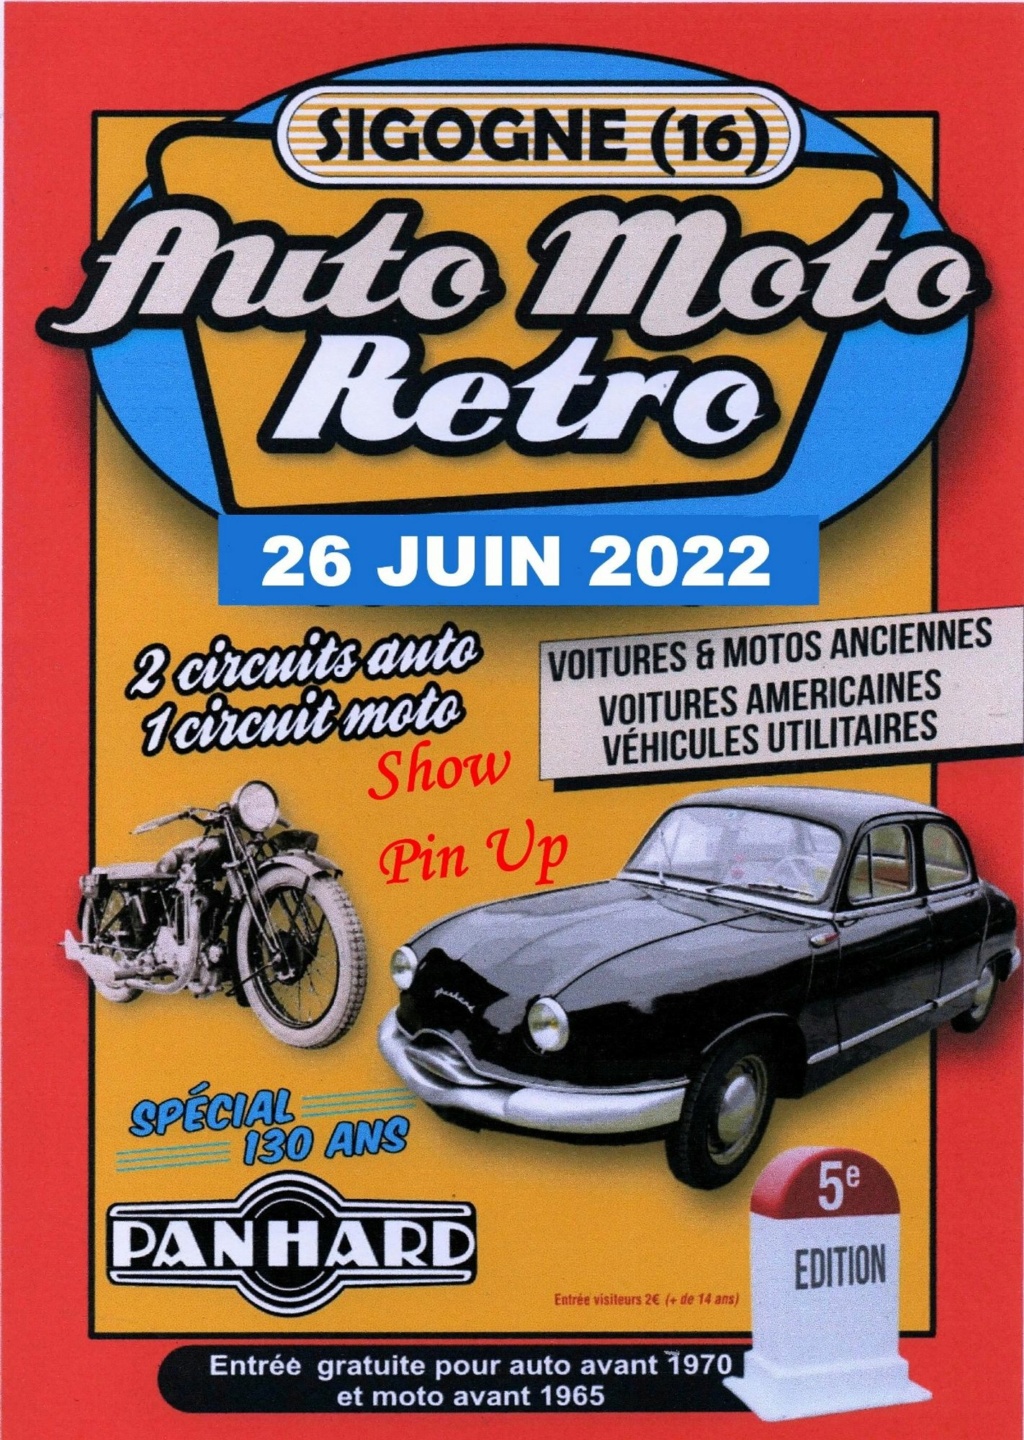 MANIFESTATION - Auto Moto Rétro - 26 Juin 2022 - Sigogne (16) Mhwidm10